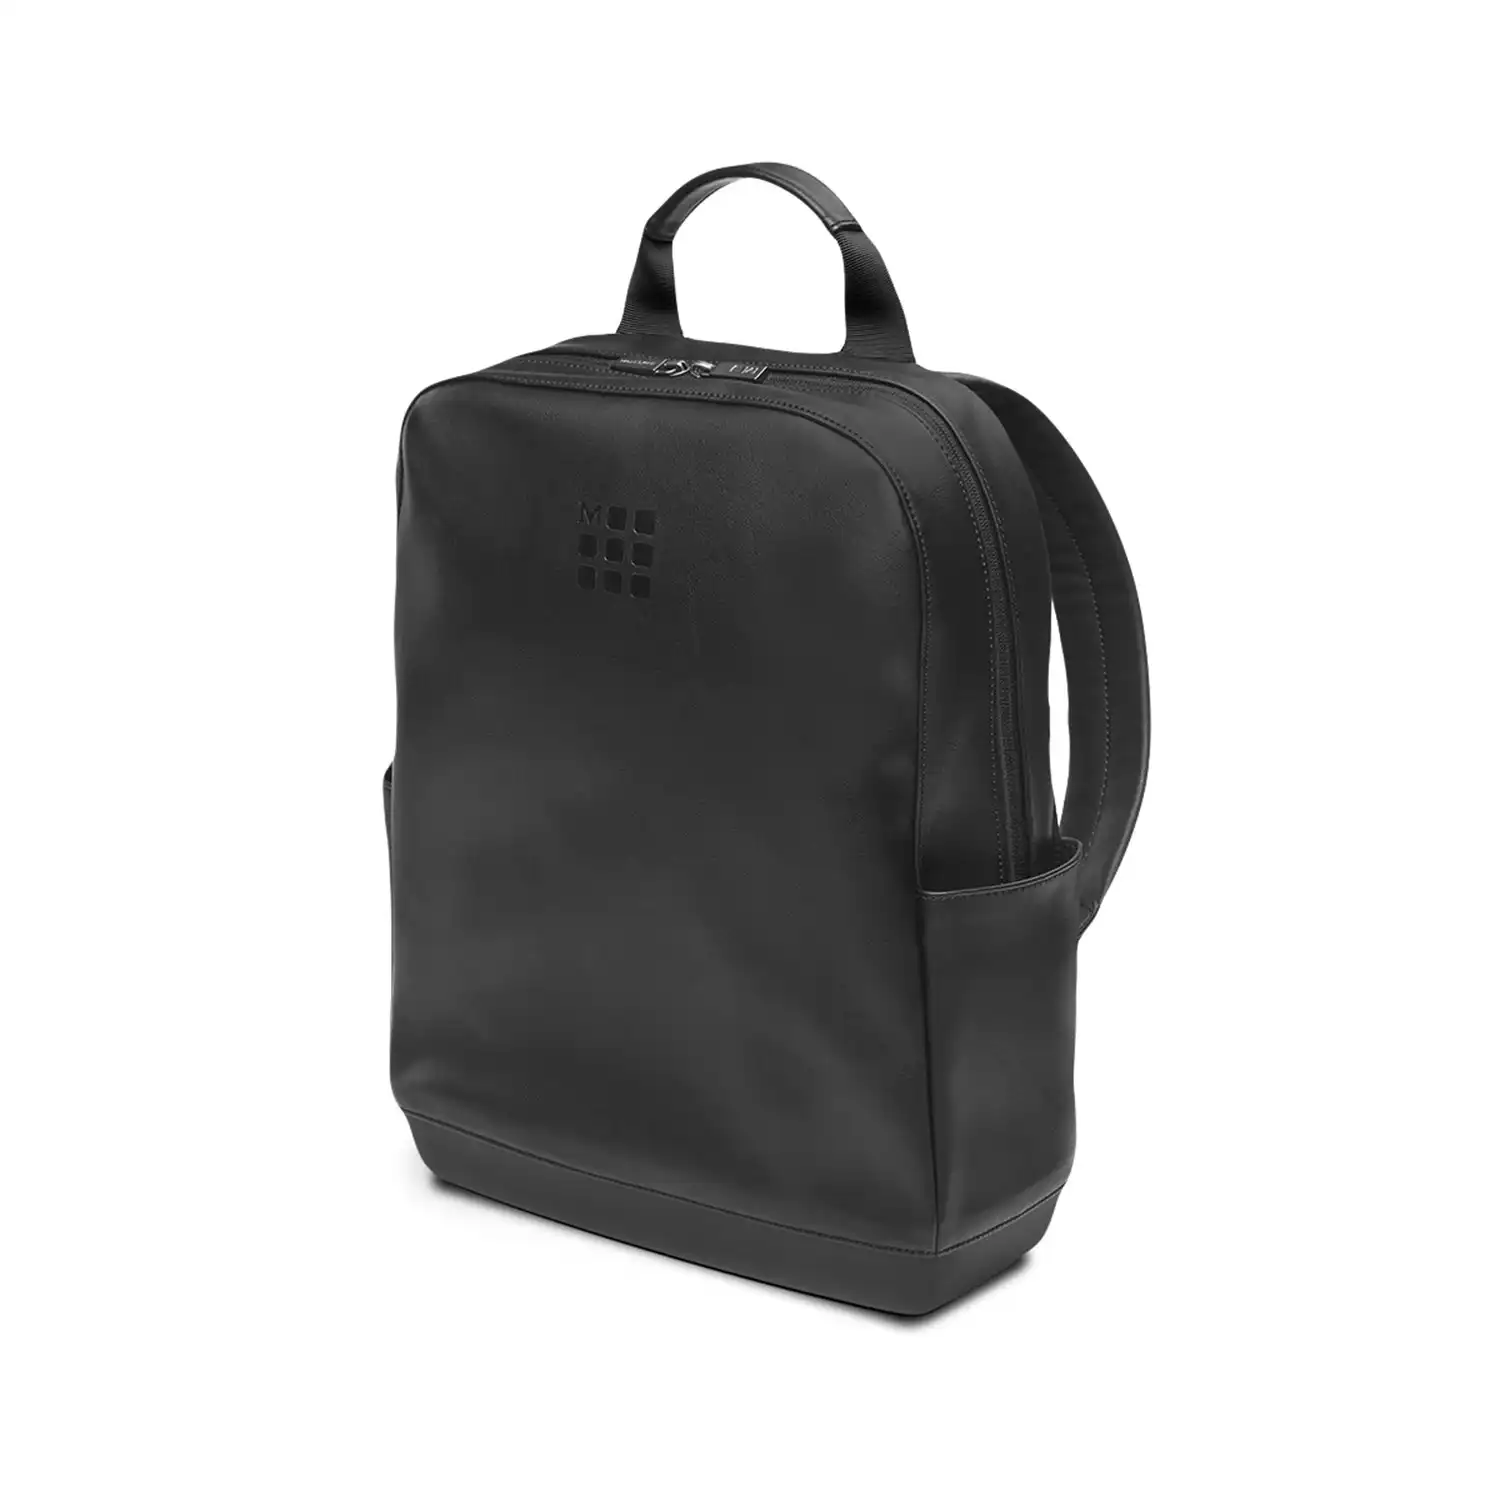 Moleskine Classic 42cm Polyurethane 15" Laptop Backpack School/Travel Bag Black